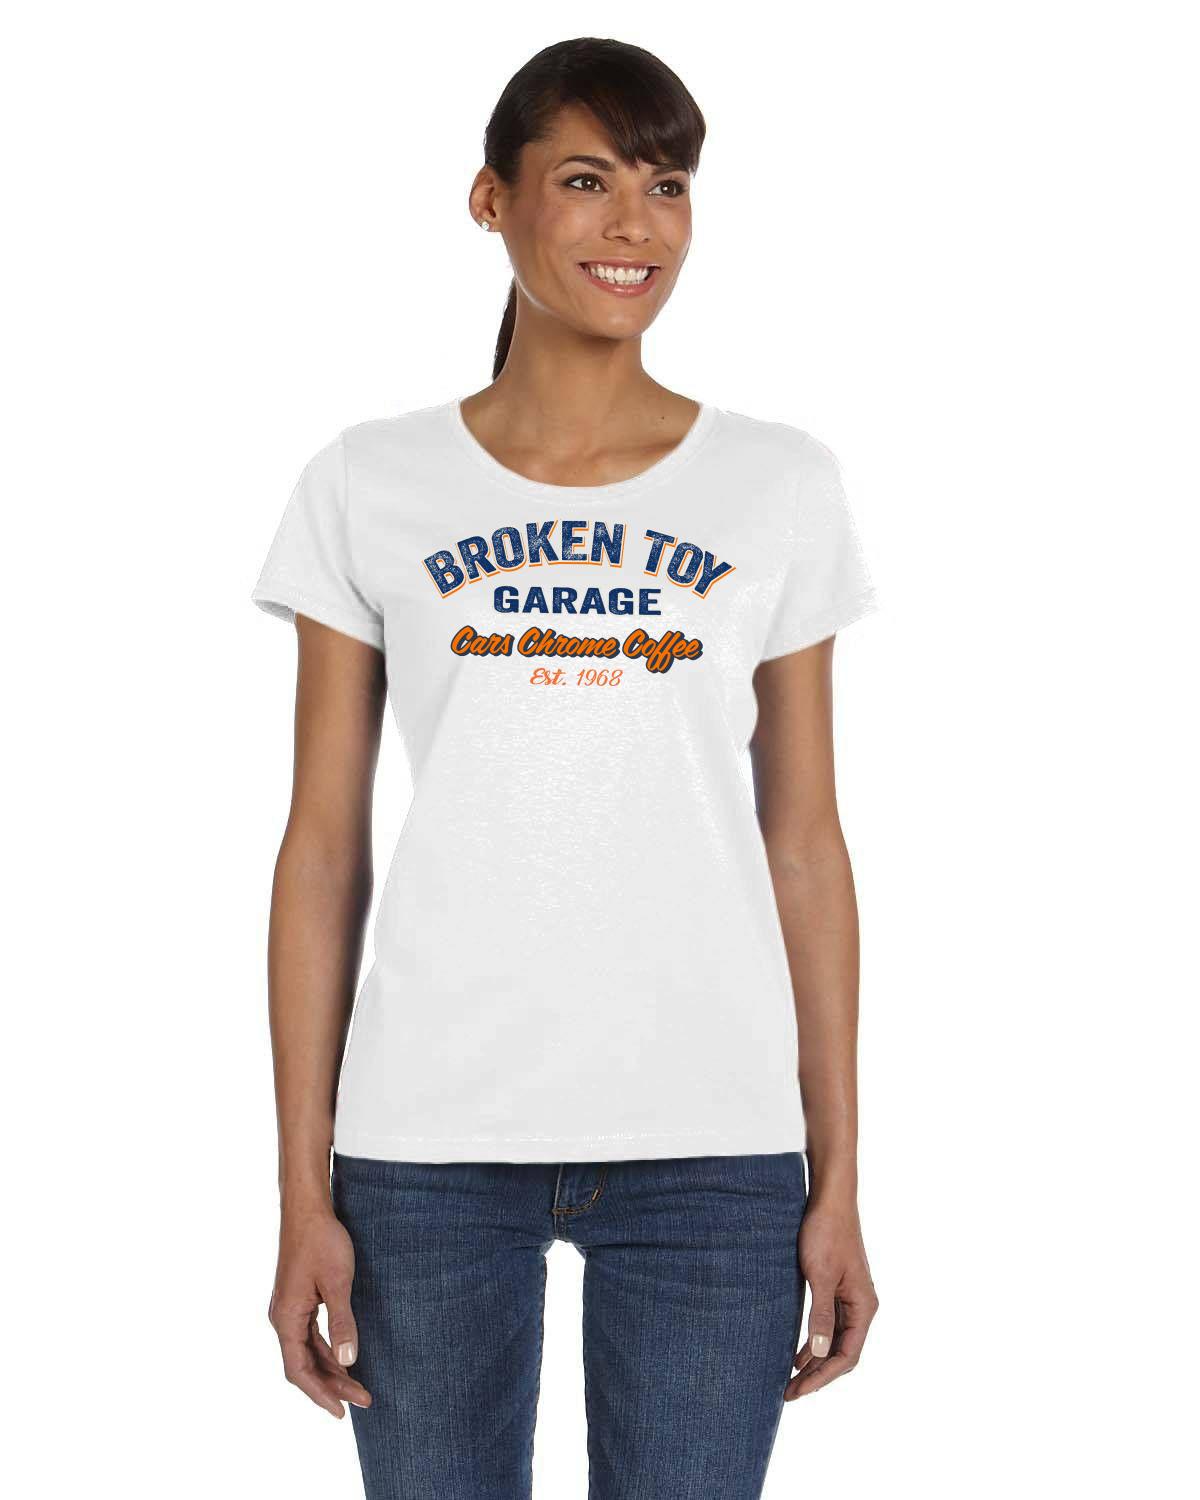 Broken Toy Garage Ladies' T-Shirt